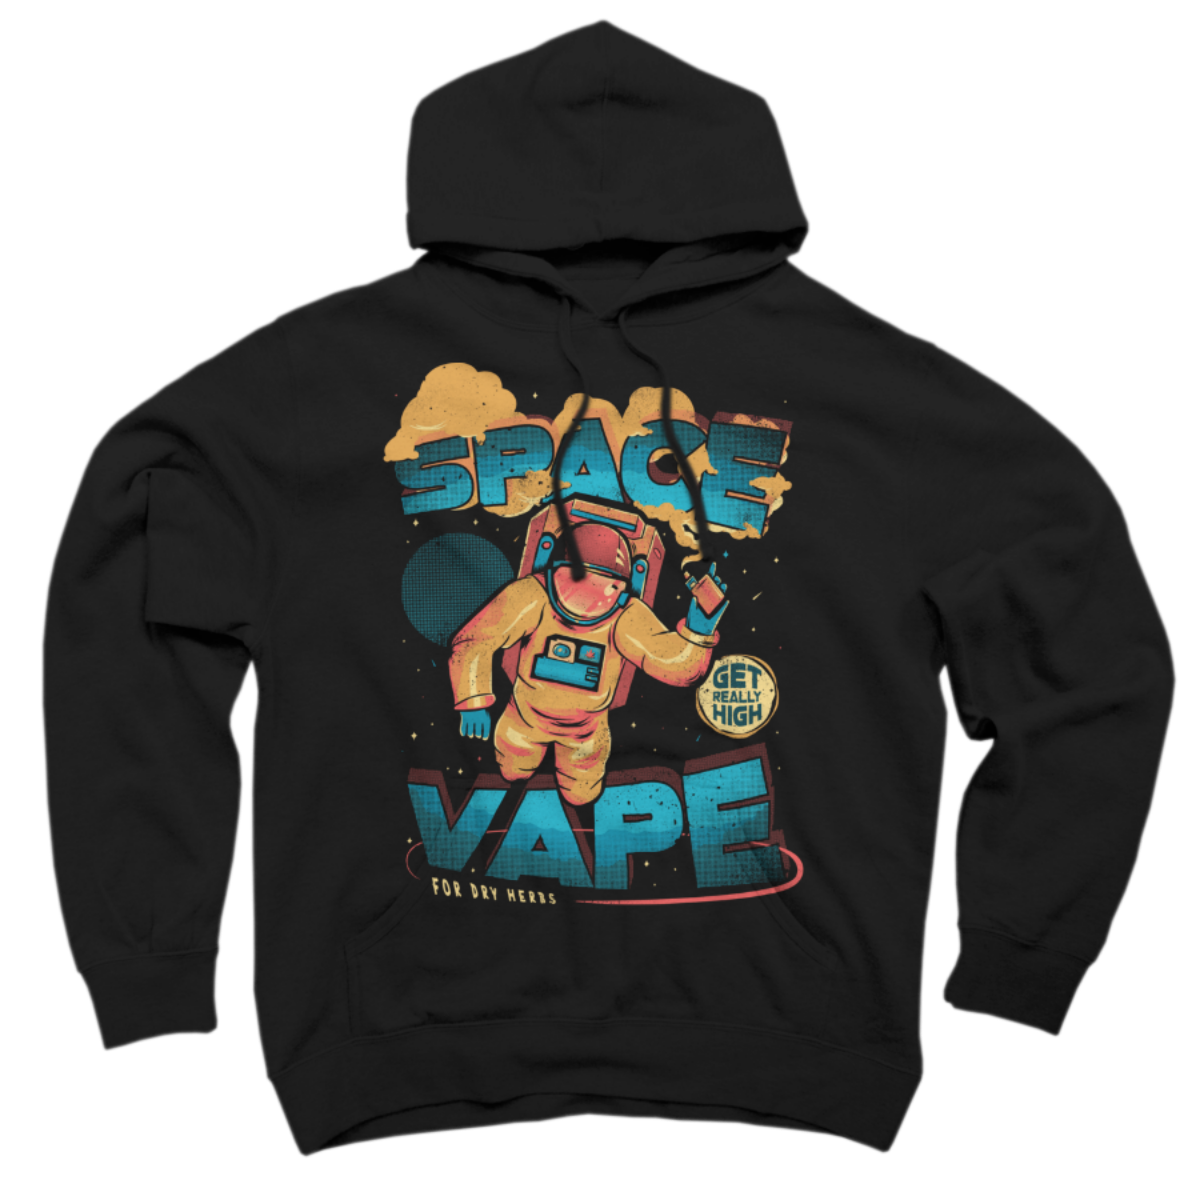 vape hoodie for sale